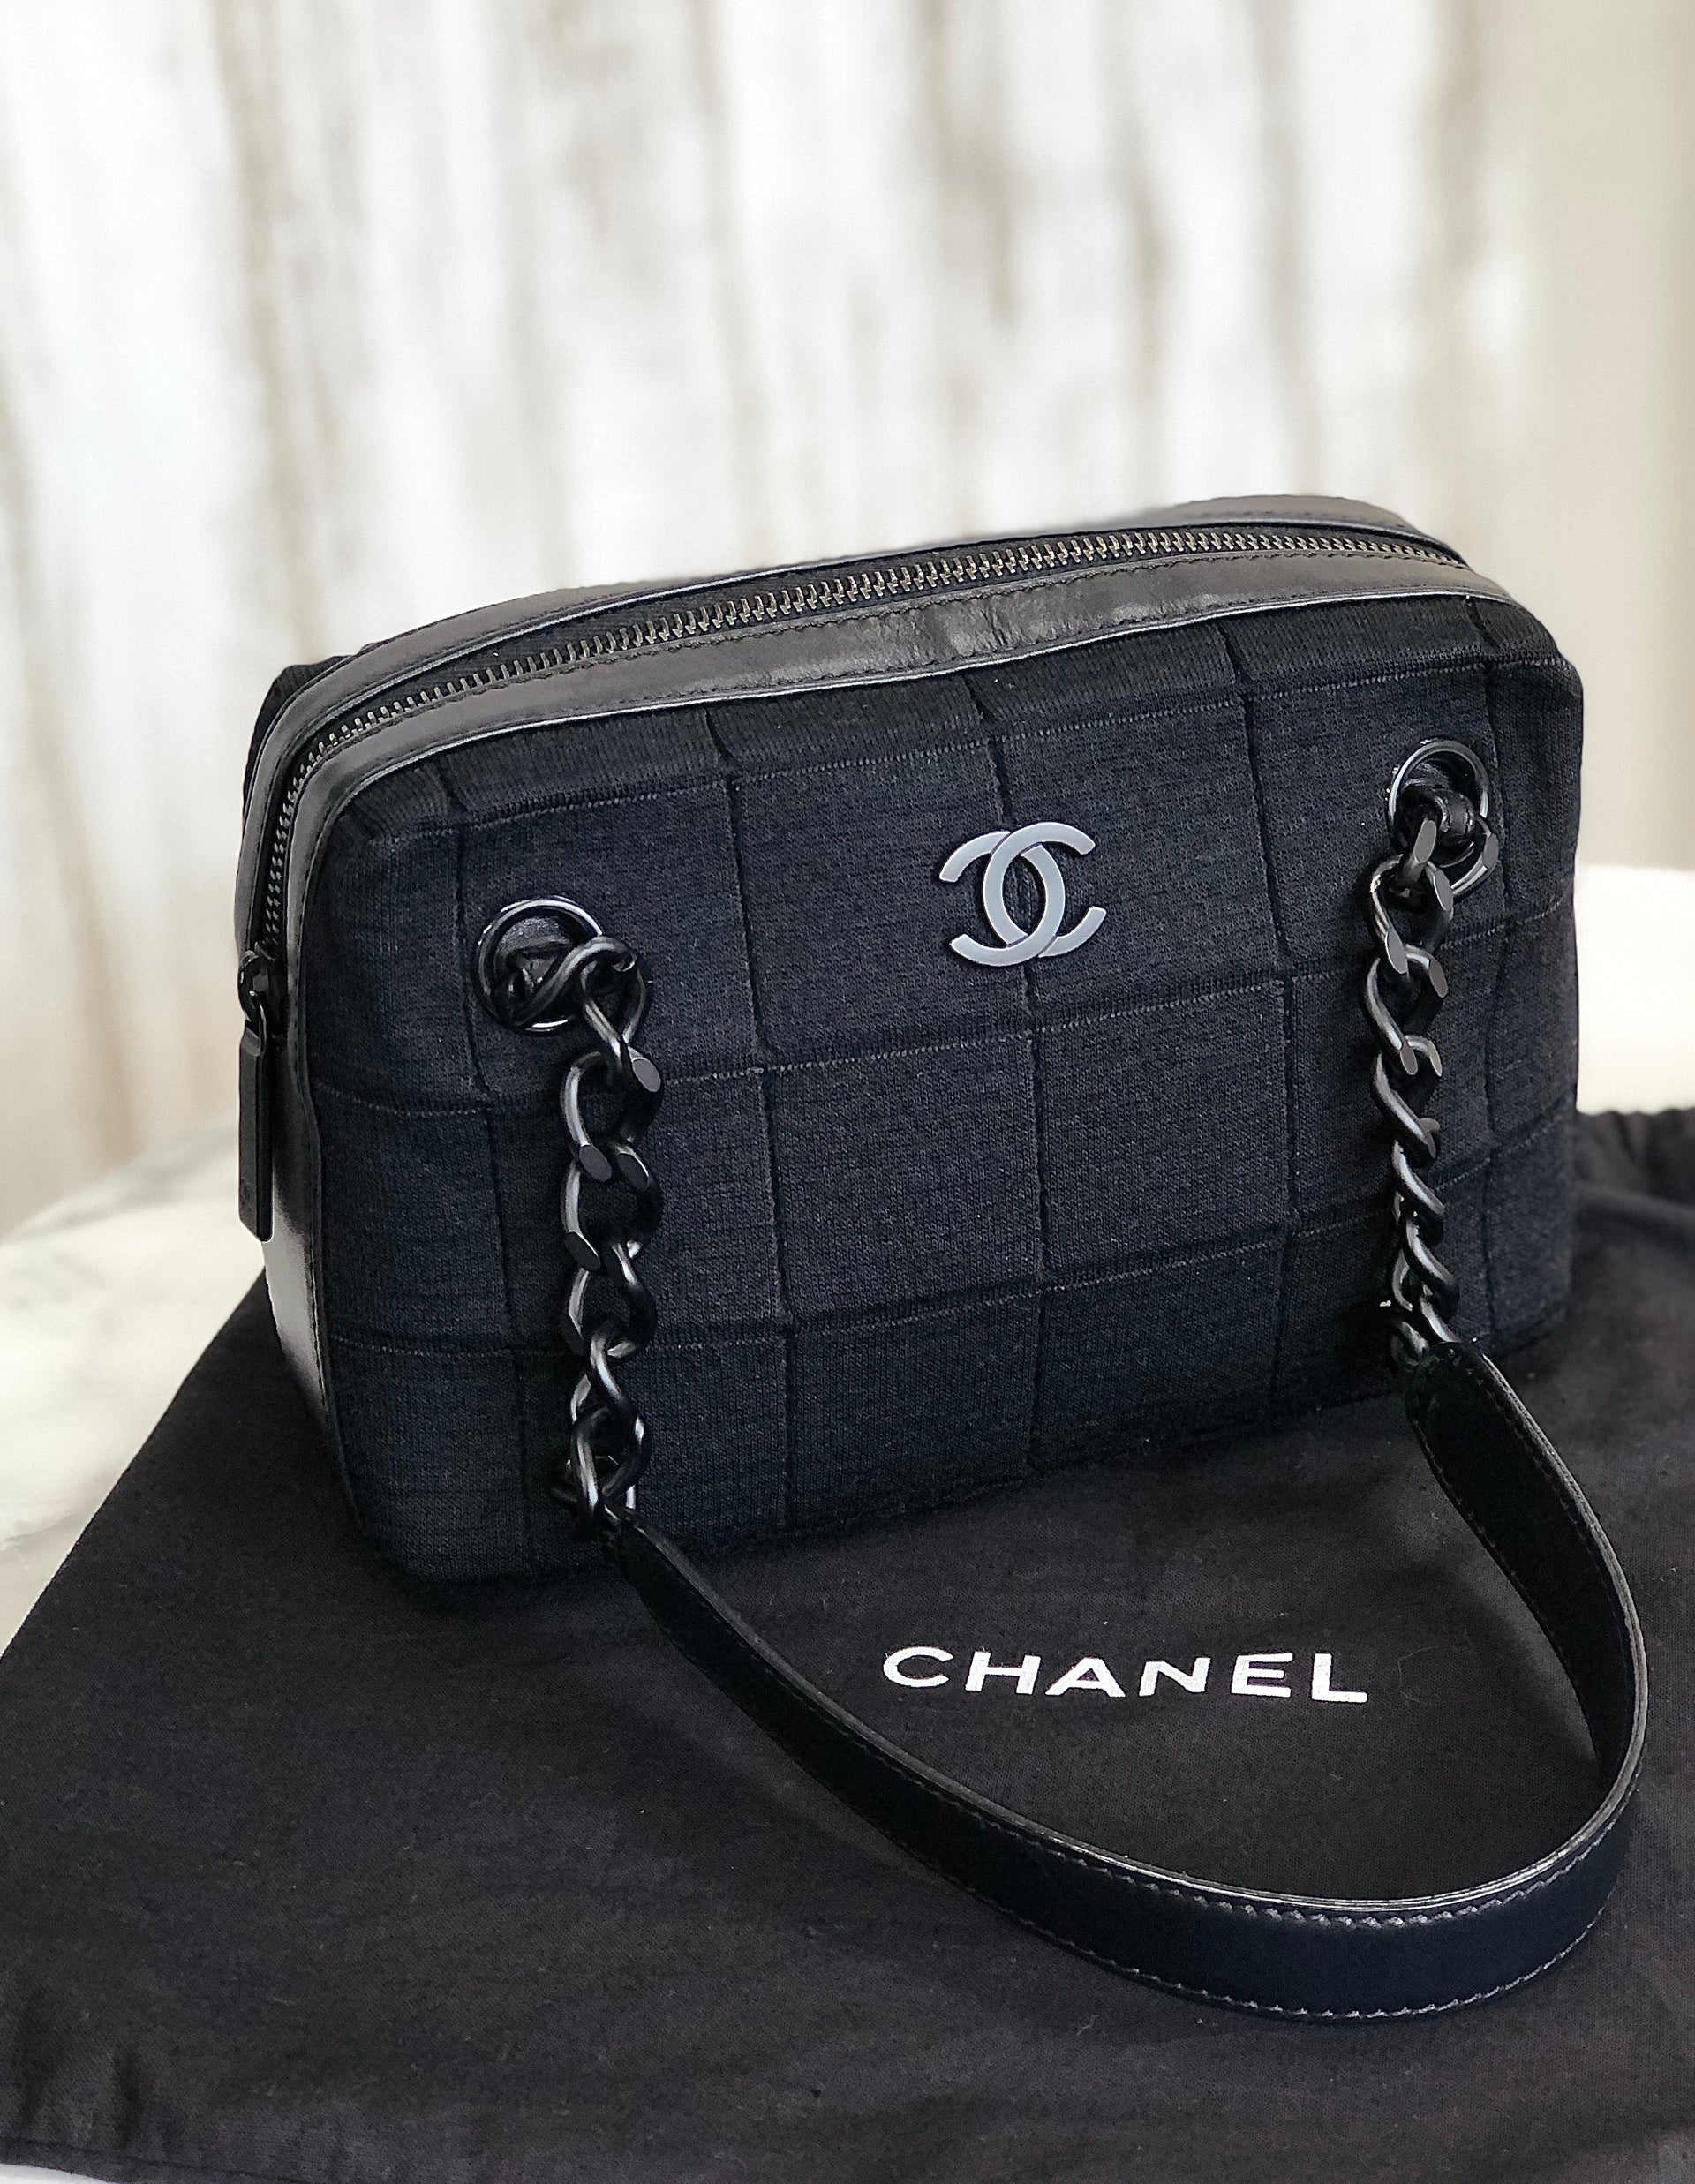 CHANEL Chocolate bar Fabric Chain Handbag Shoulder bag Black